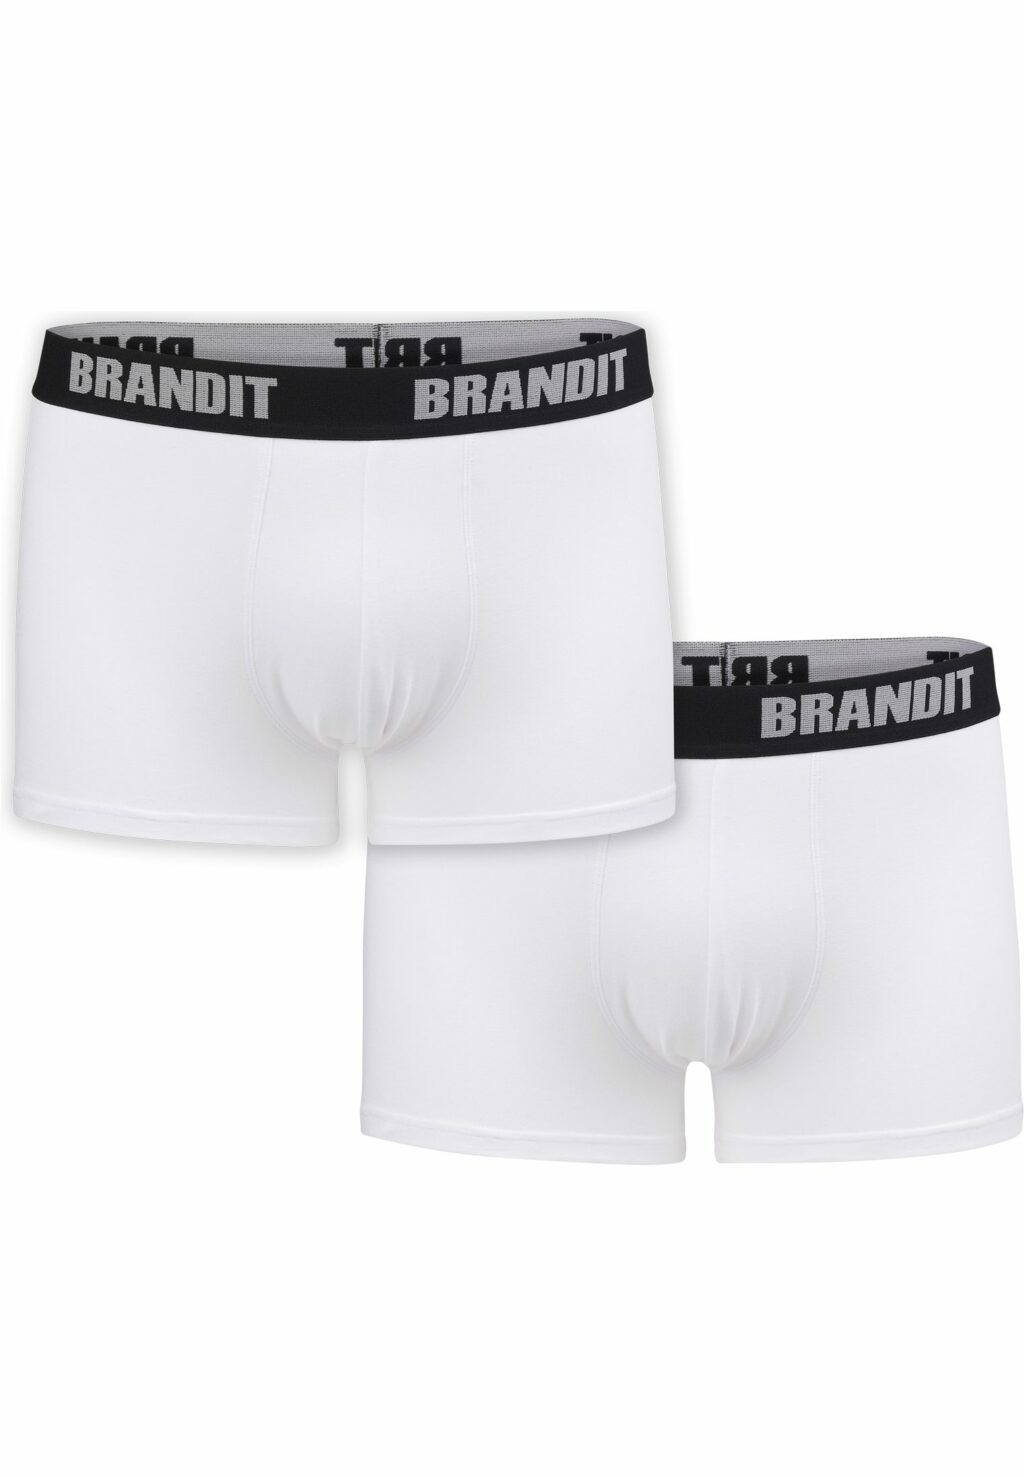 Brandit Boxershorts Logo 2-Pack wht/wht BD4501